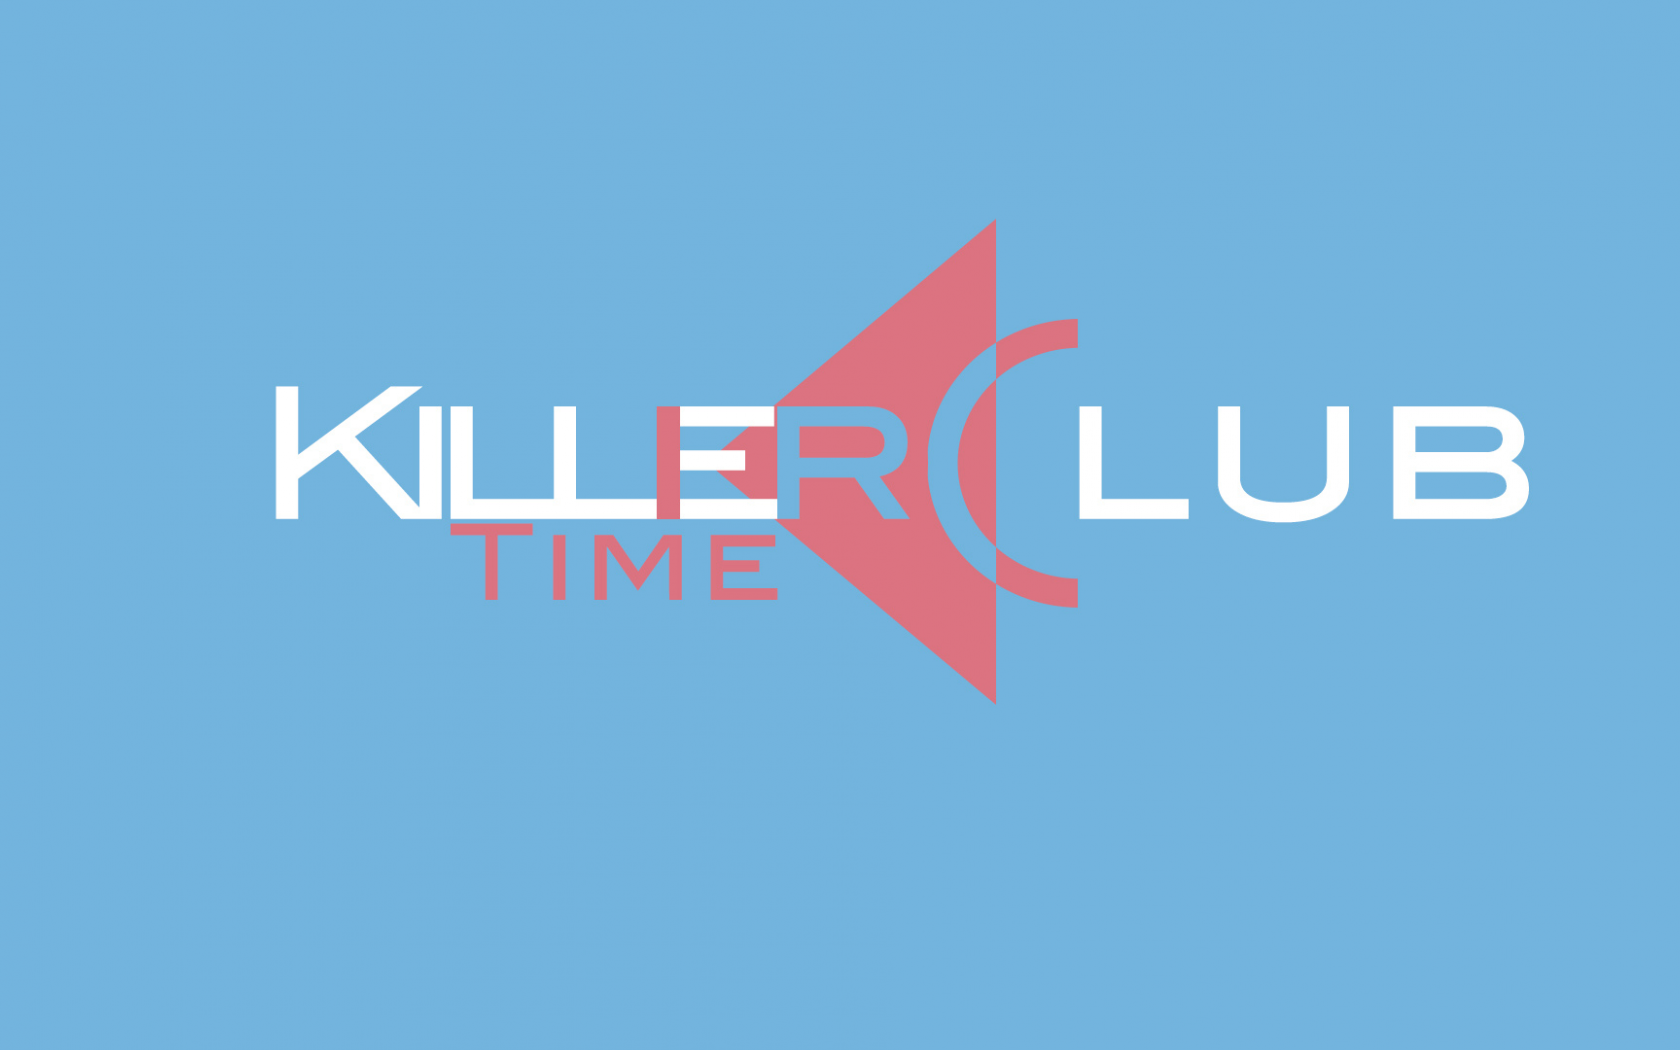 killer, время, минимализм, club, клуб, убийцы, убийца, time